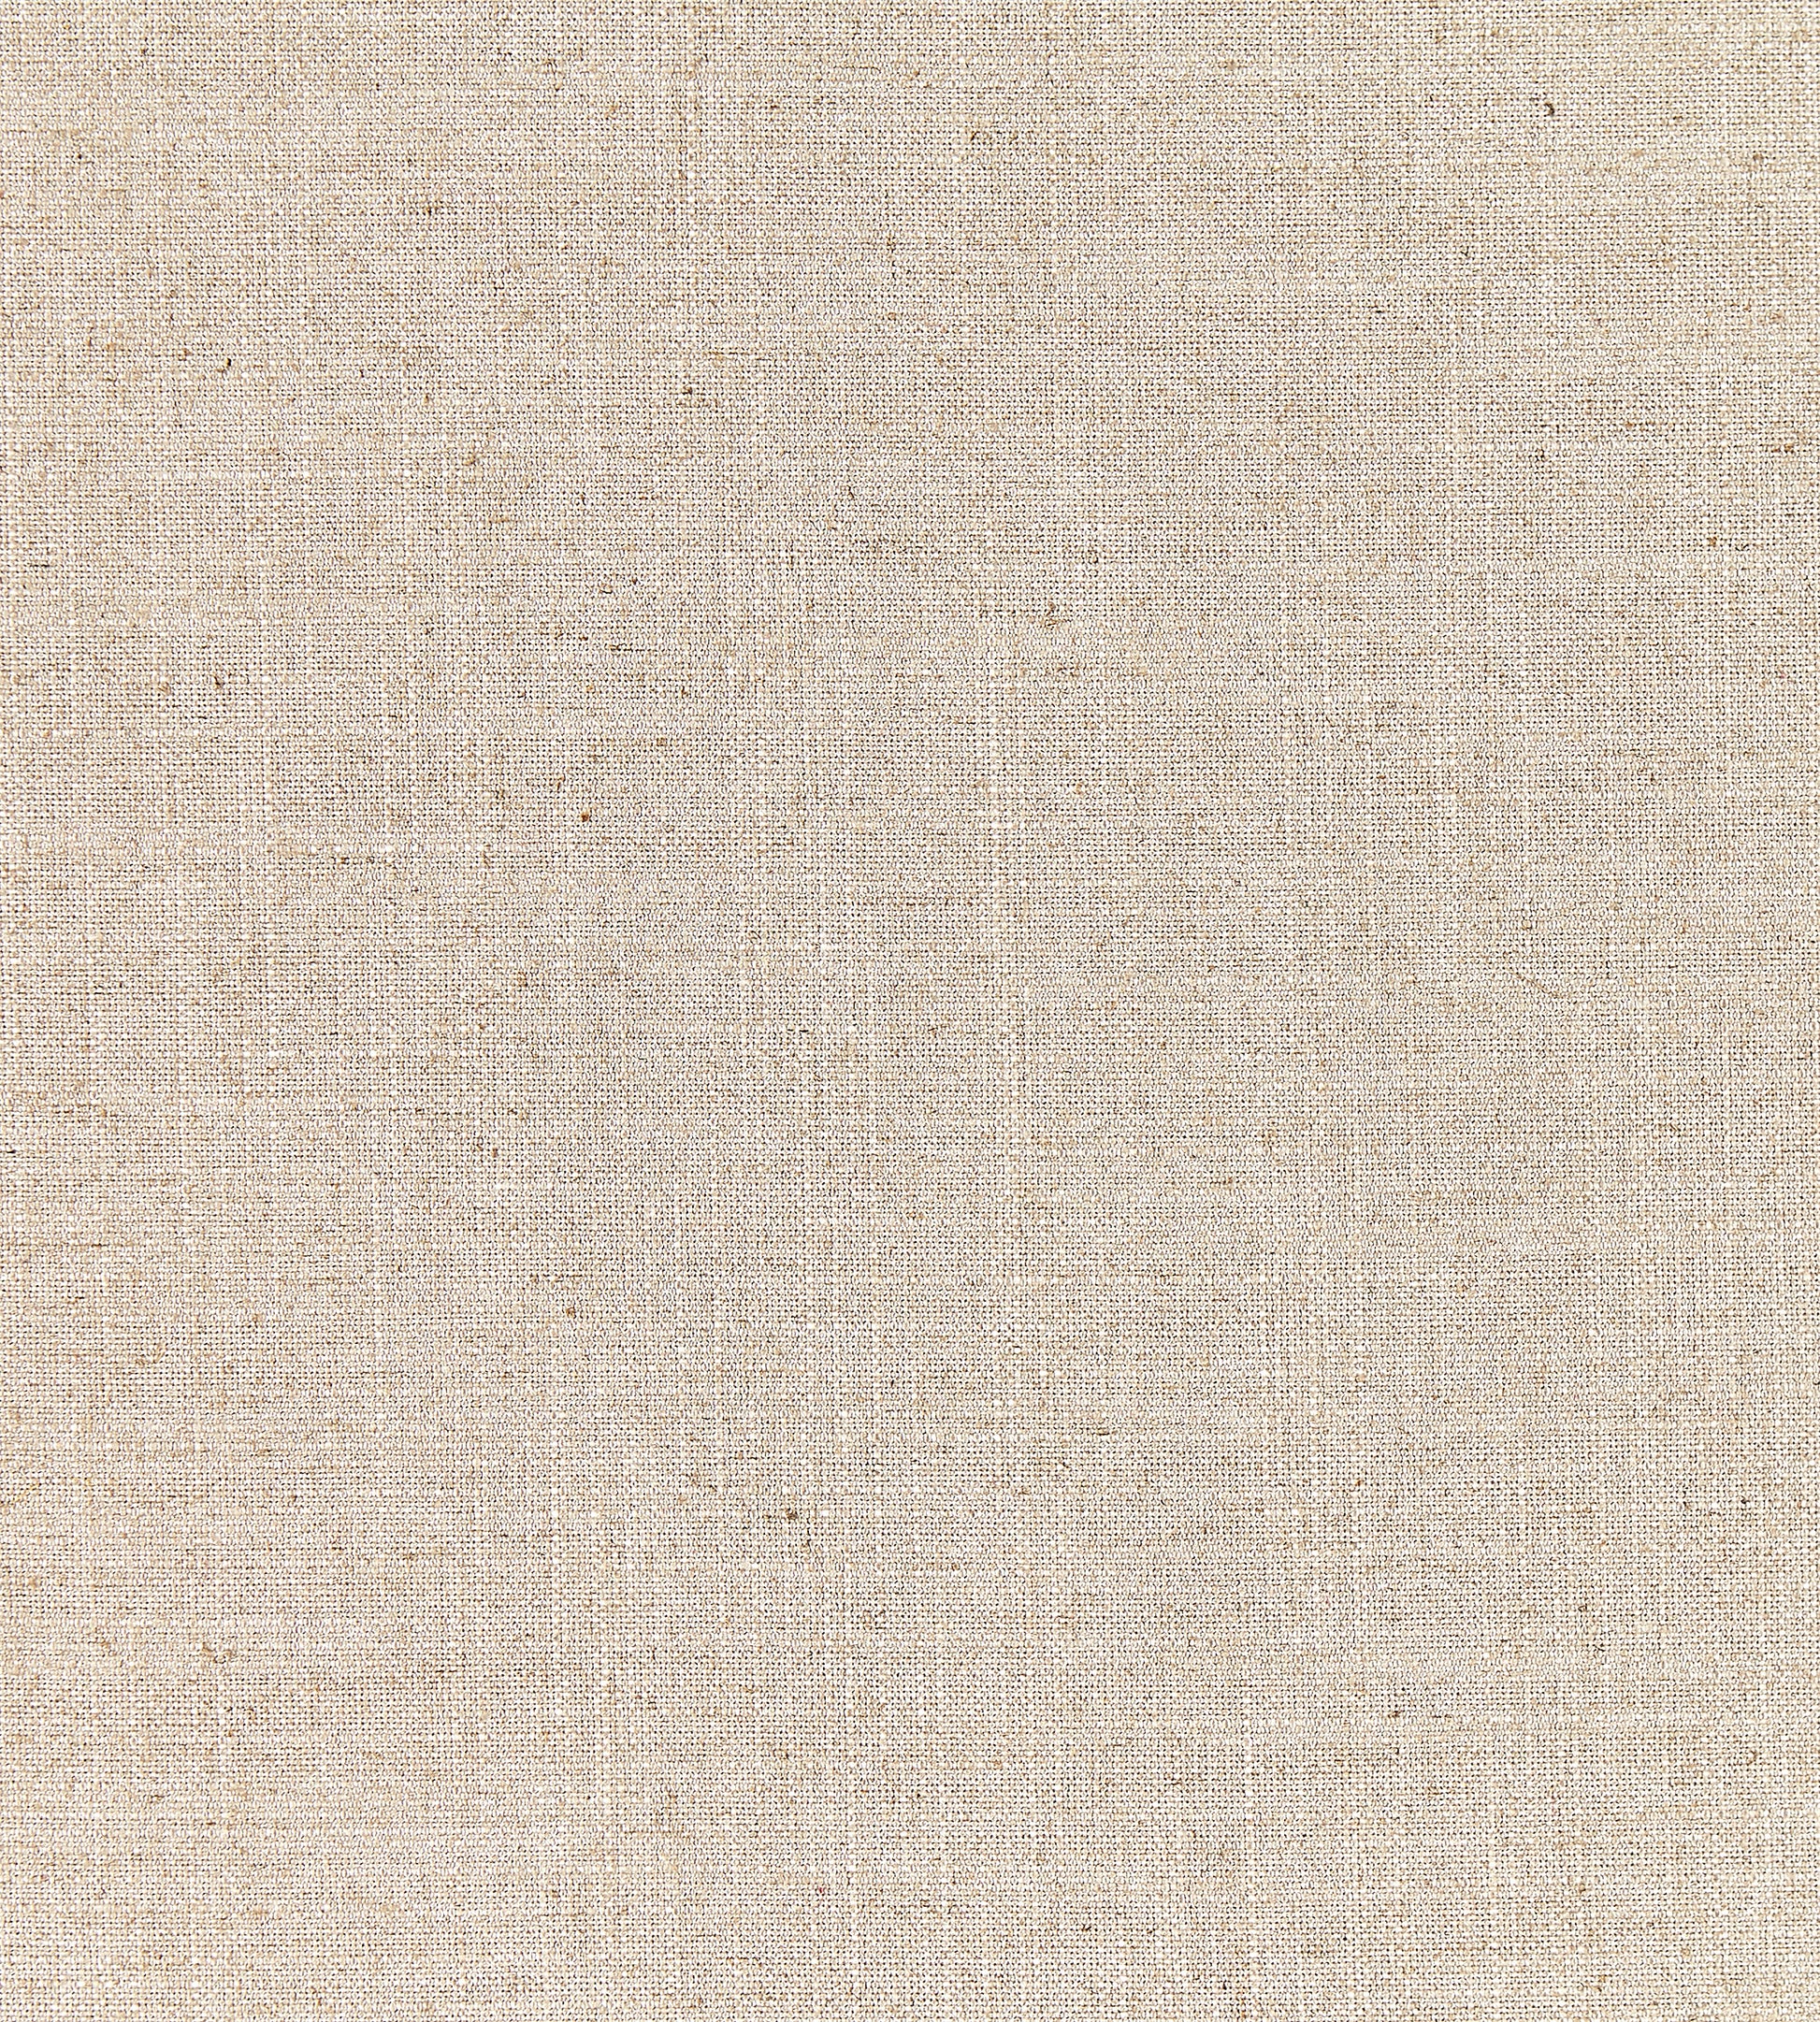 Purchase Boris Kroll Fabric Pattern# SC 0005K65106, Hampton Weave Linen 1